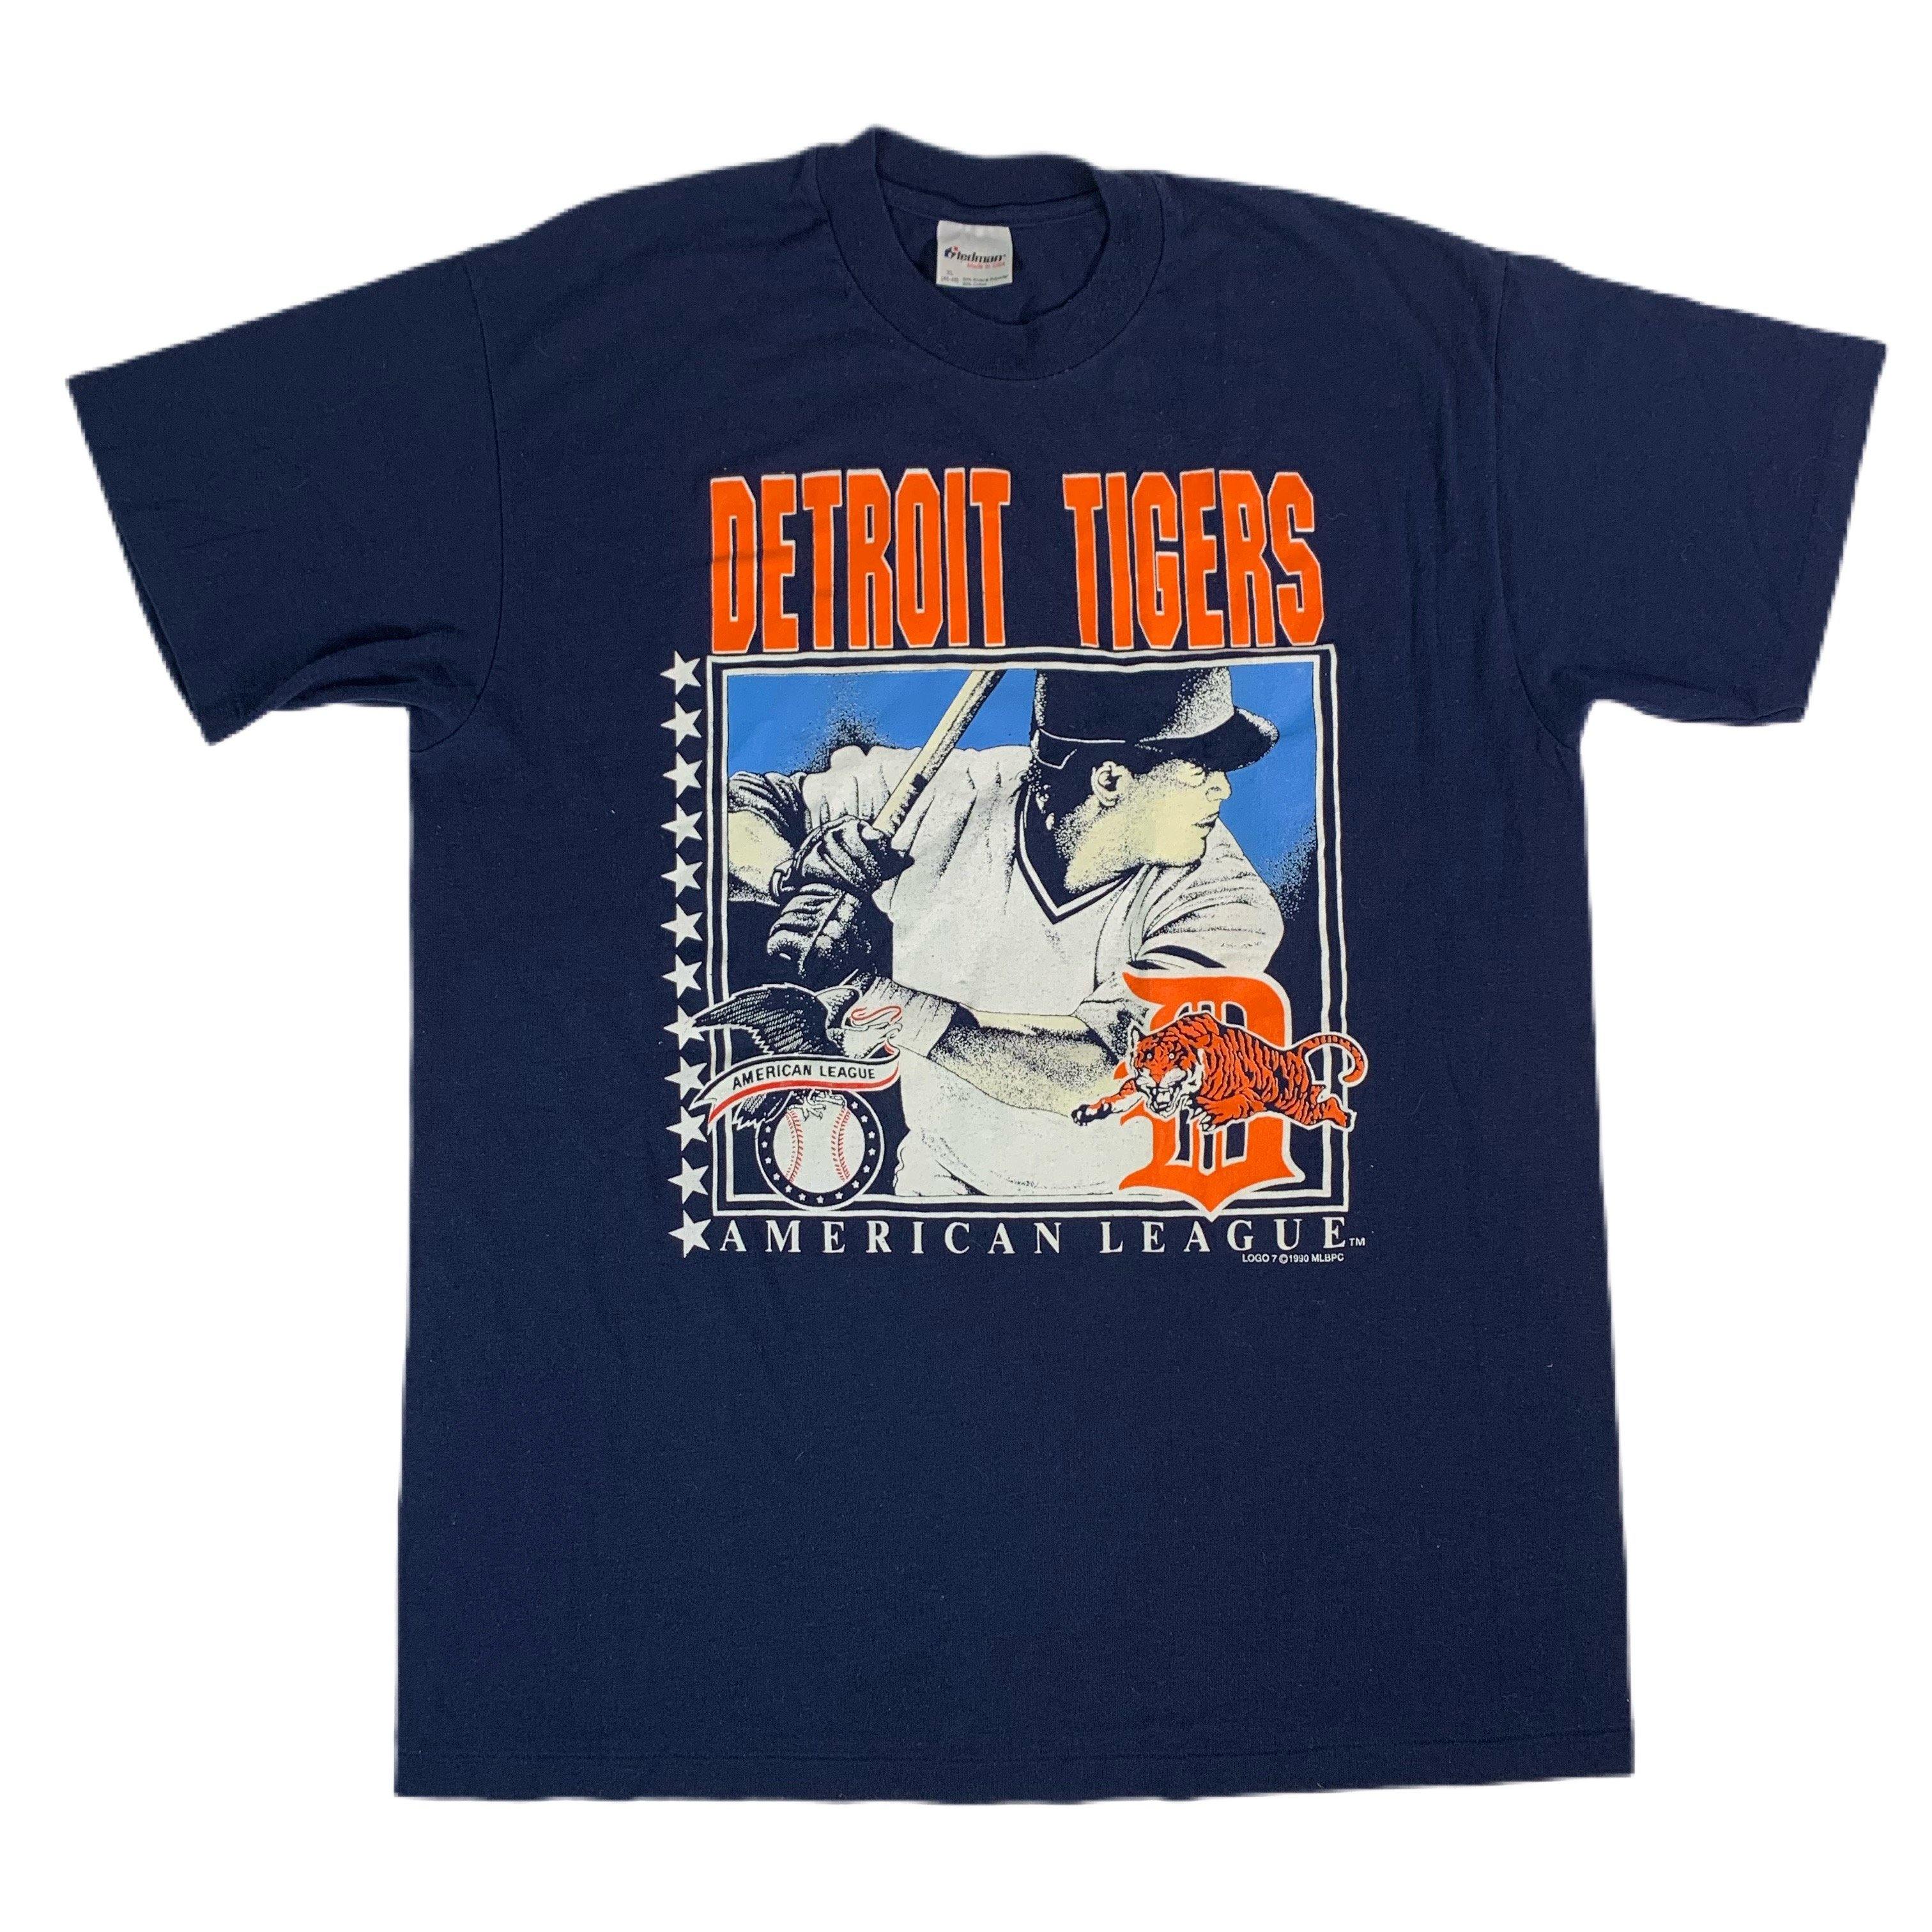 Detroit Tigers Apparel & Gear.